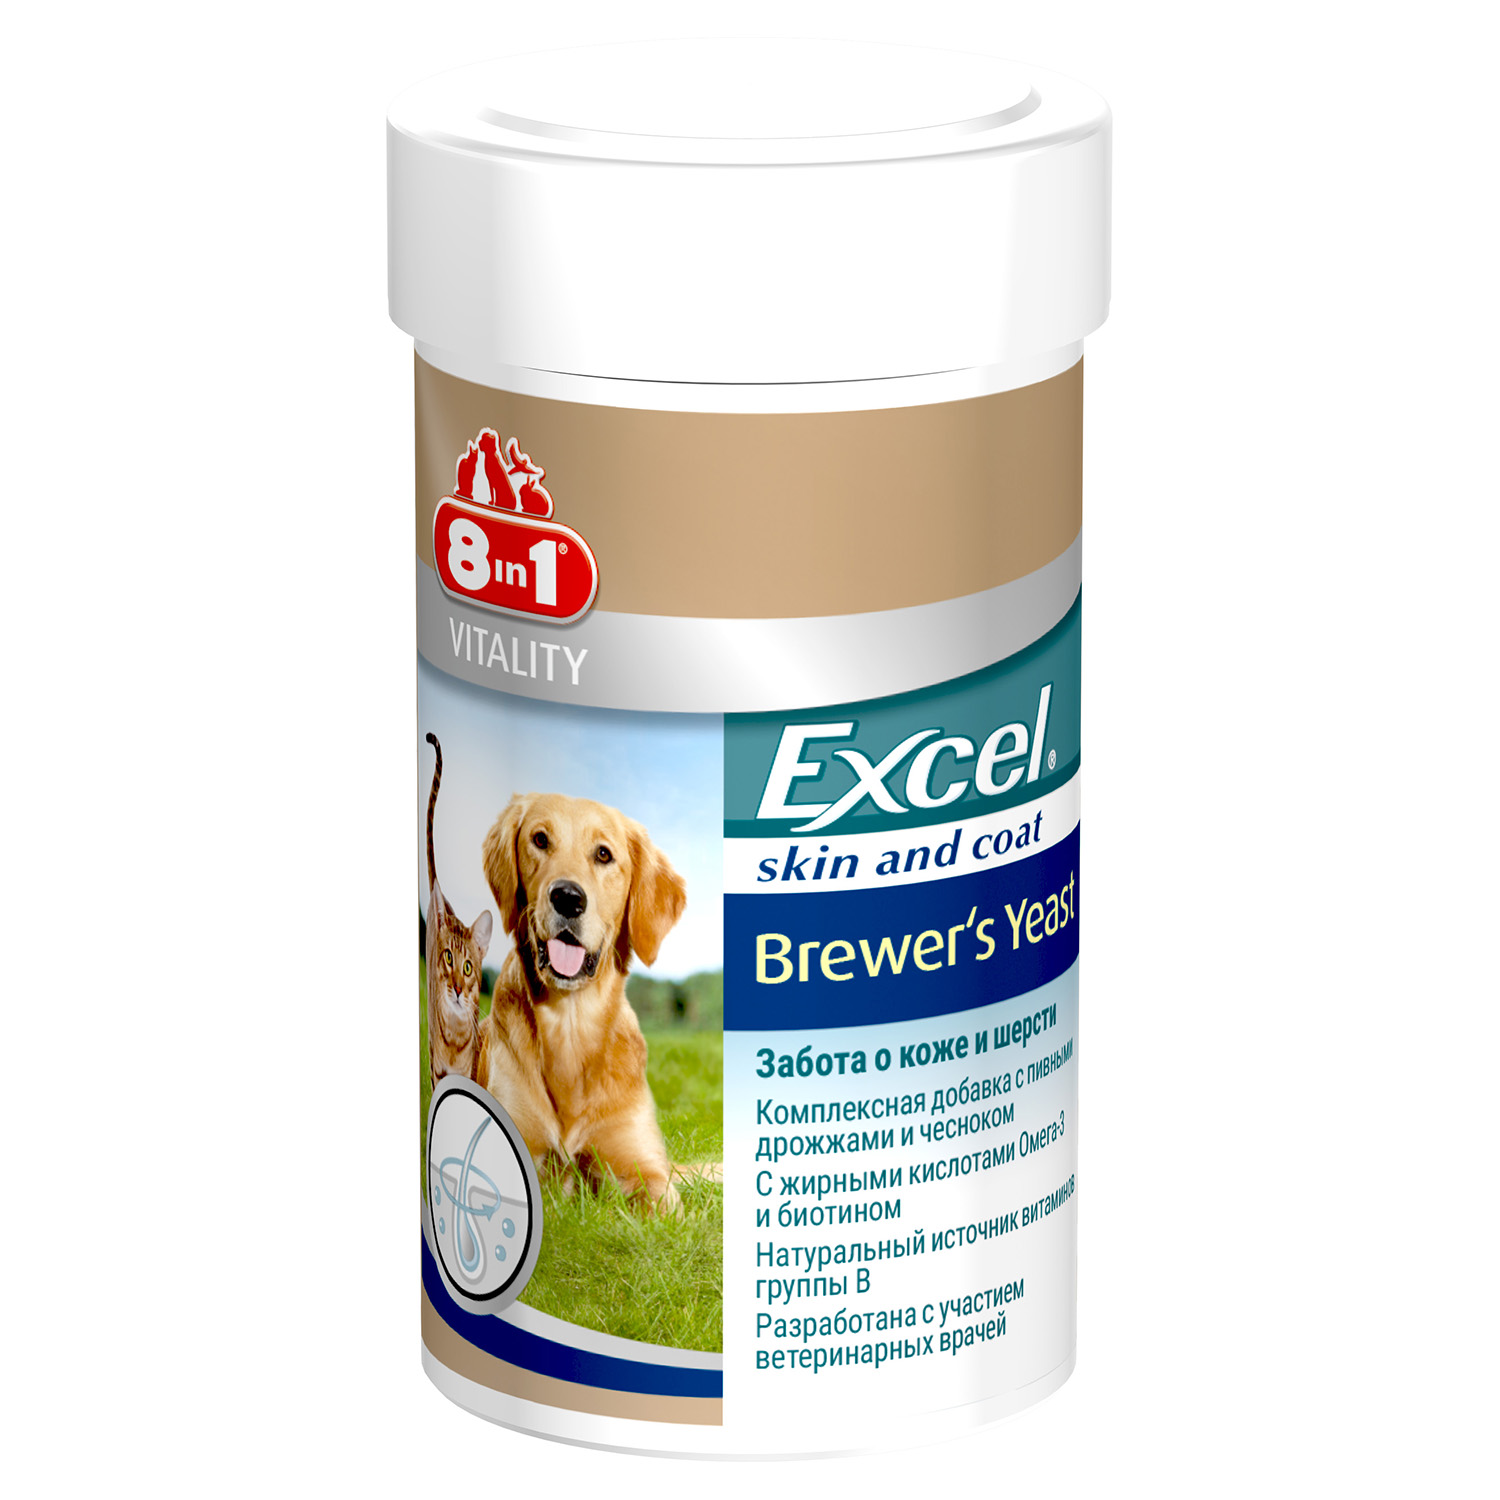 8 in 1 Excel Brewers Yeast корм добавка пивн. дрожжи д/кош и соб 260 шт